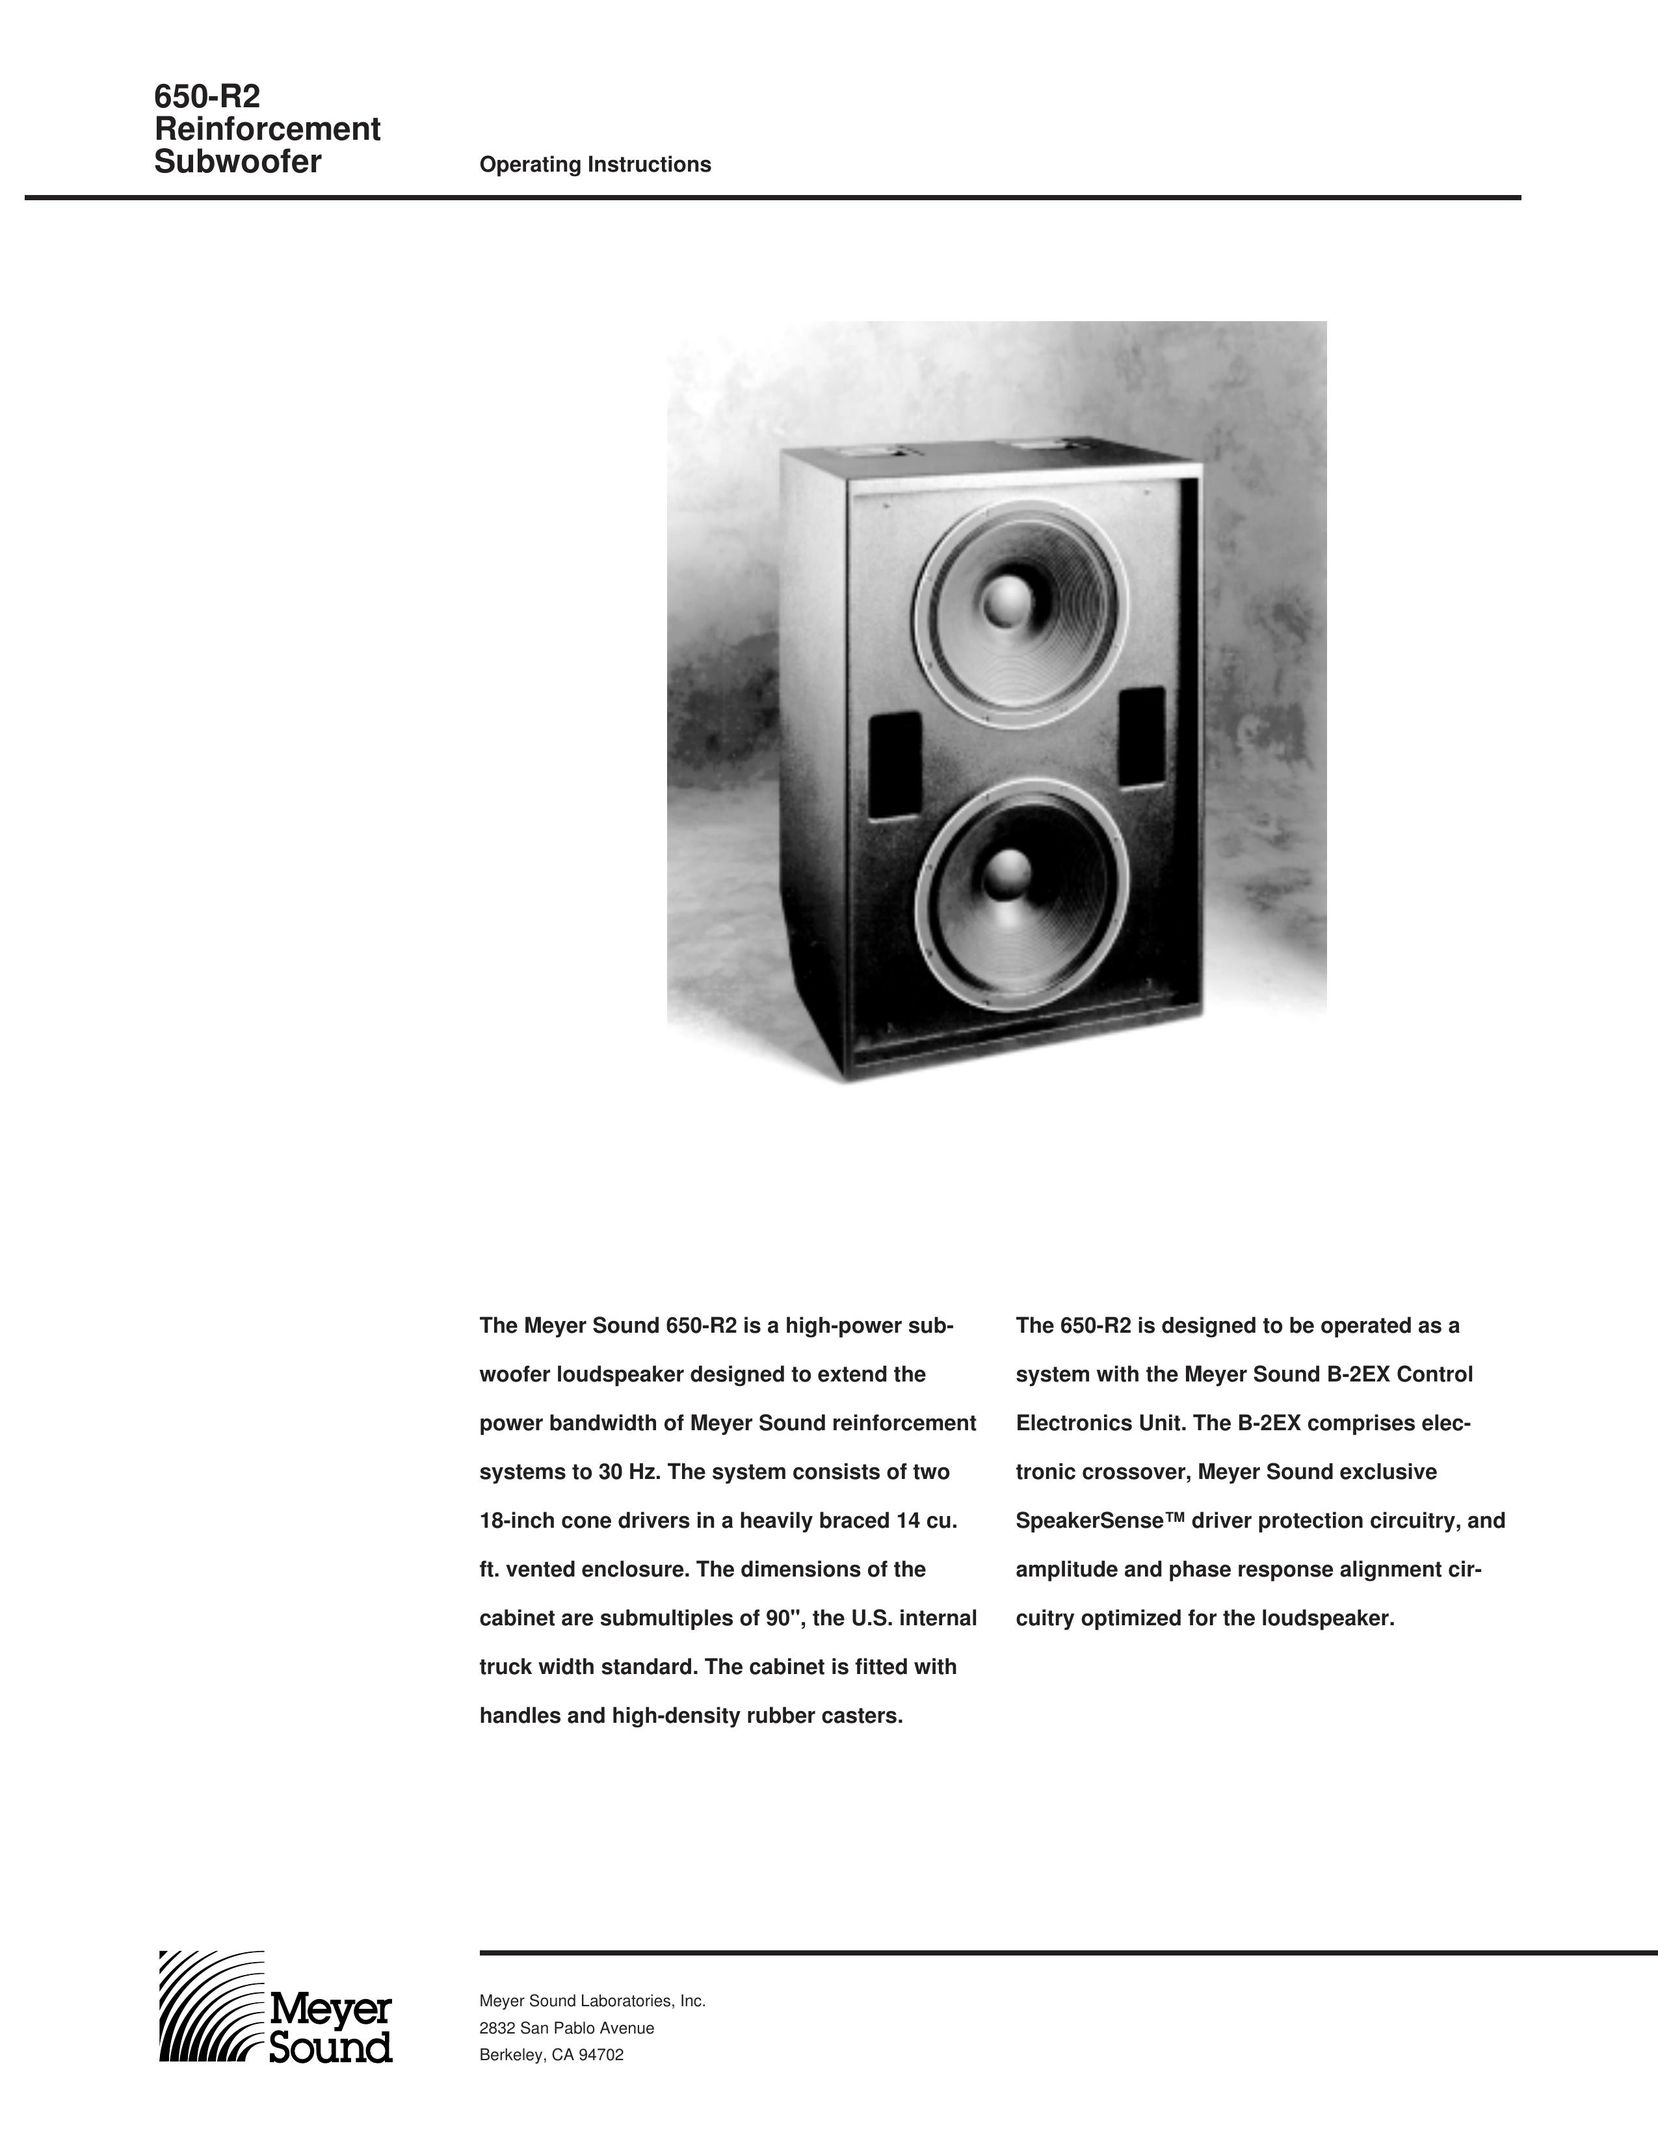 Meyer Sound 650-R2 Speaker User Manual